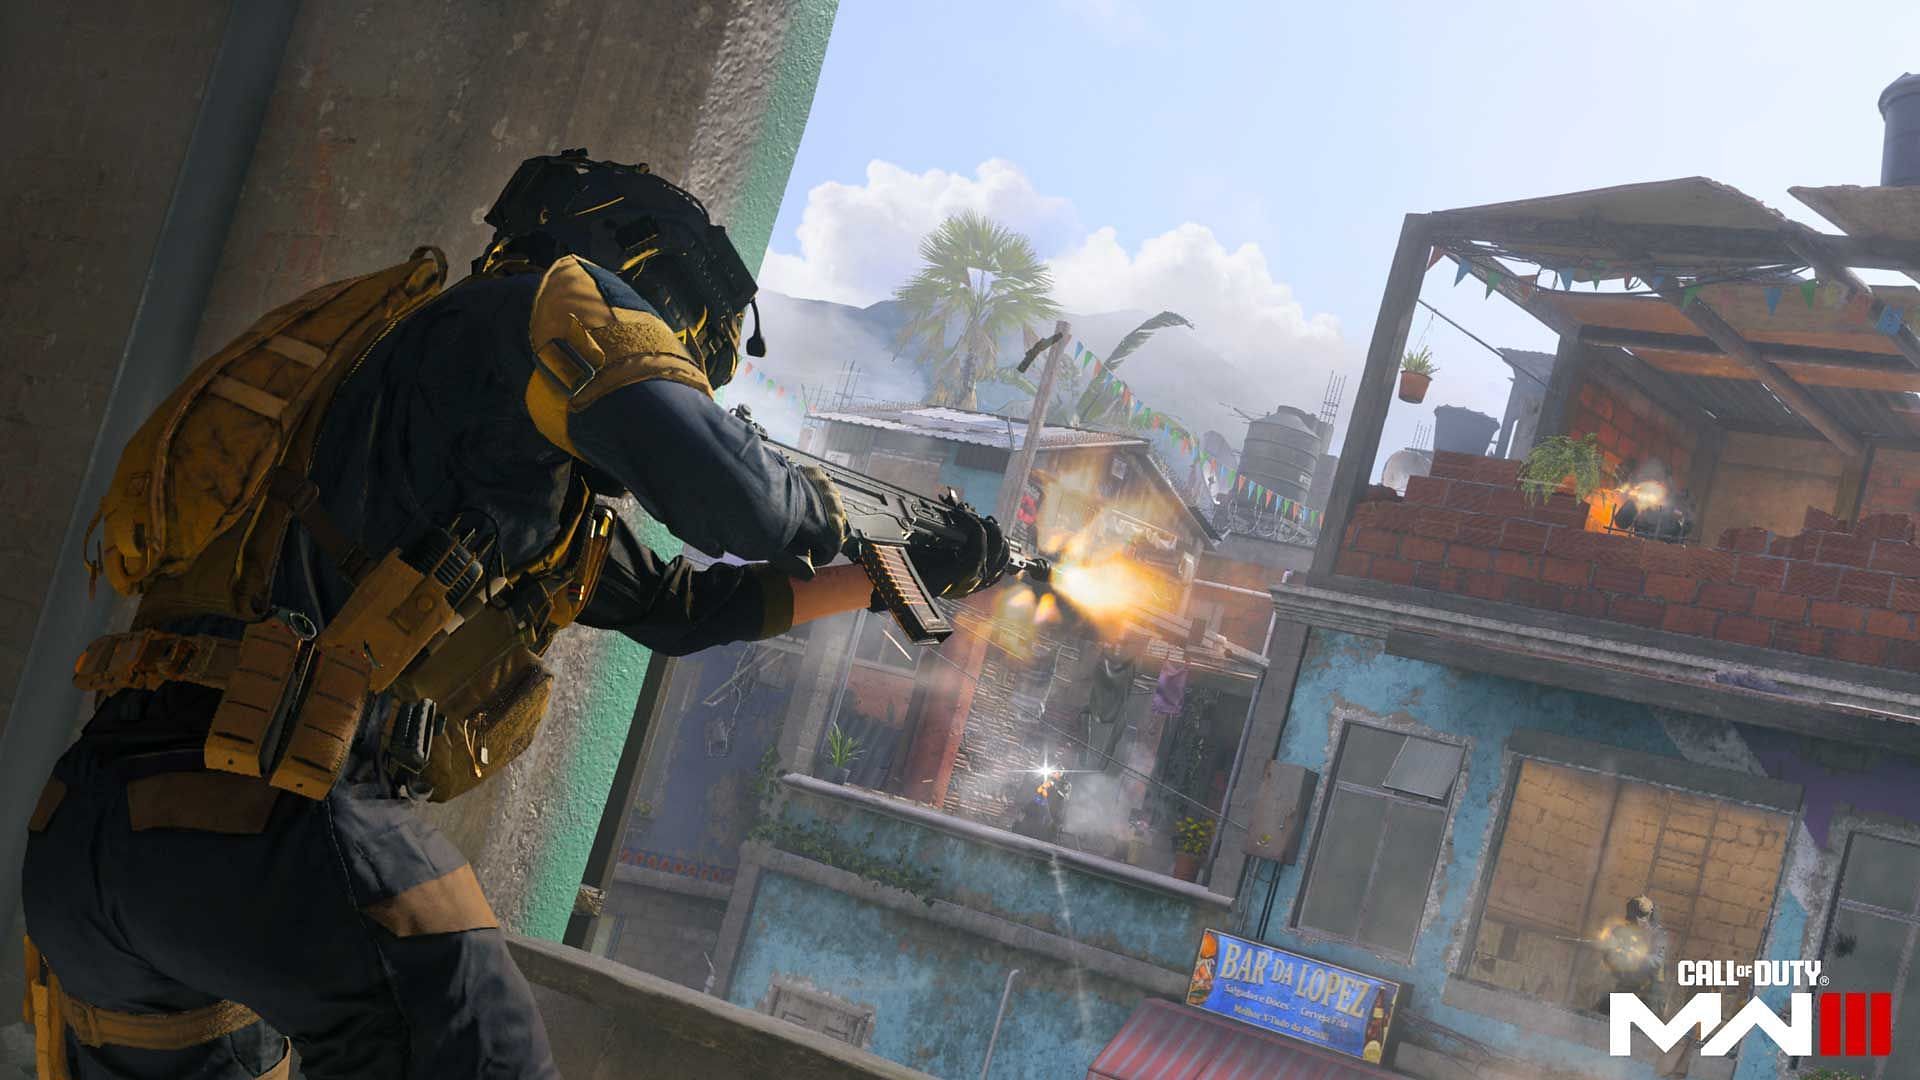 Call Of Duty: Modern Warfare 2: How To Unlock All The Beta Rewards